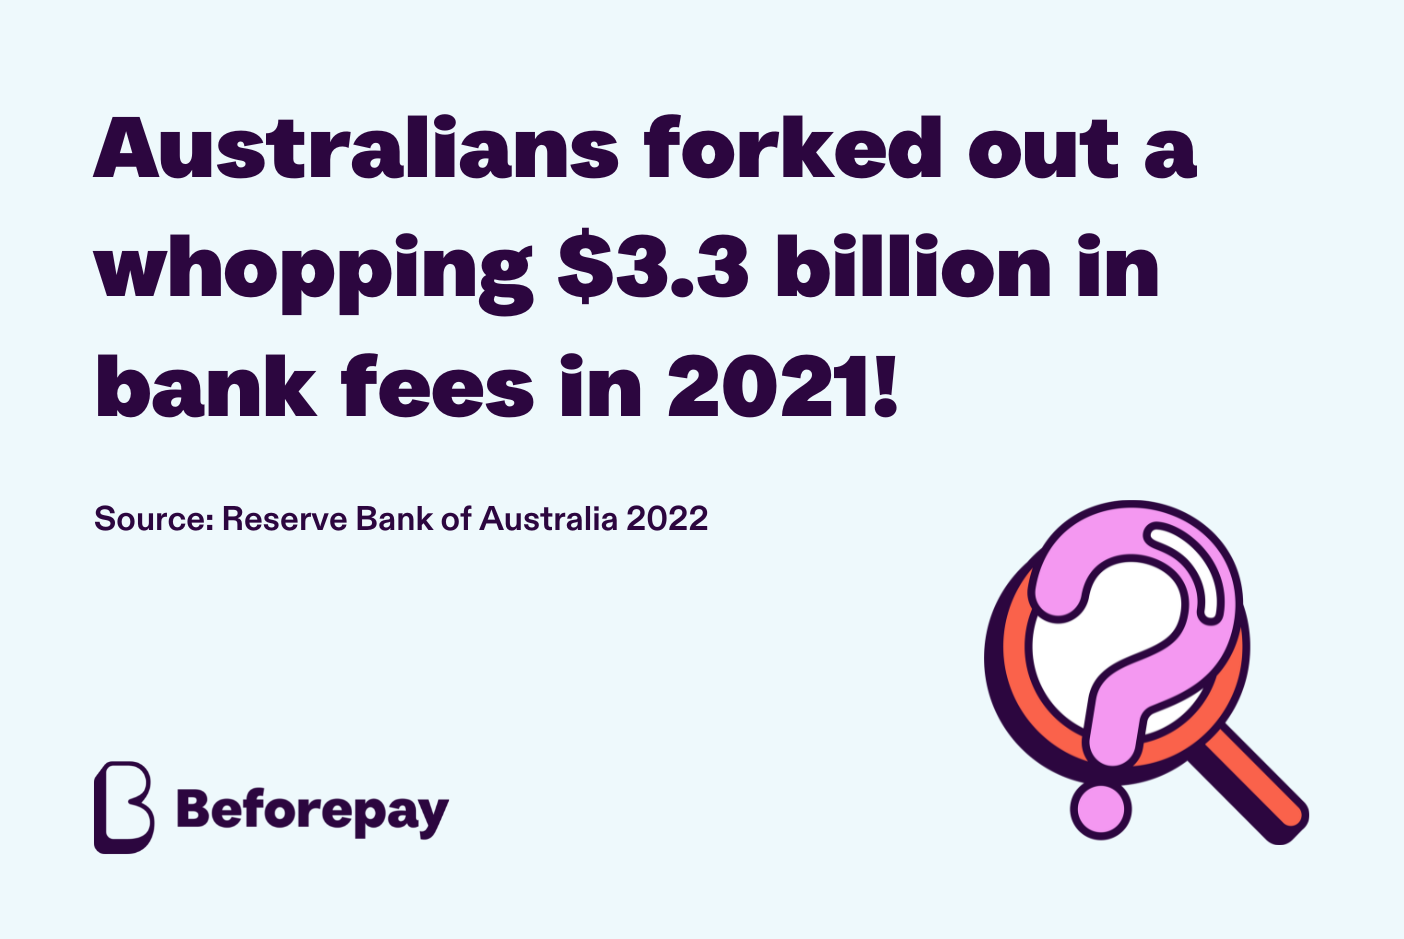 In 2021 Australians paid $3.3 billion in bank fees.